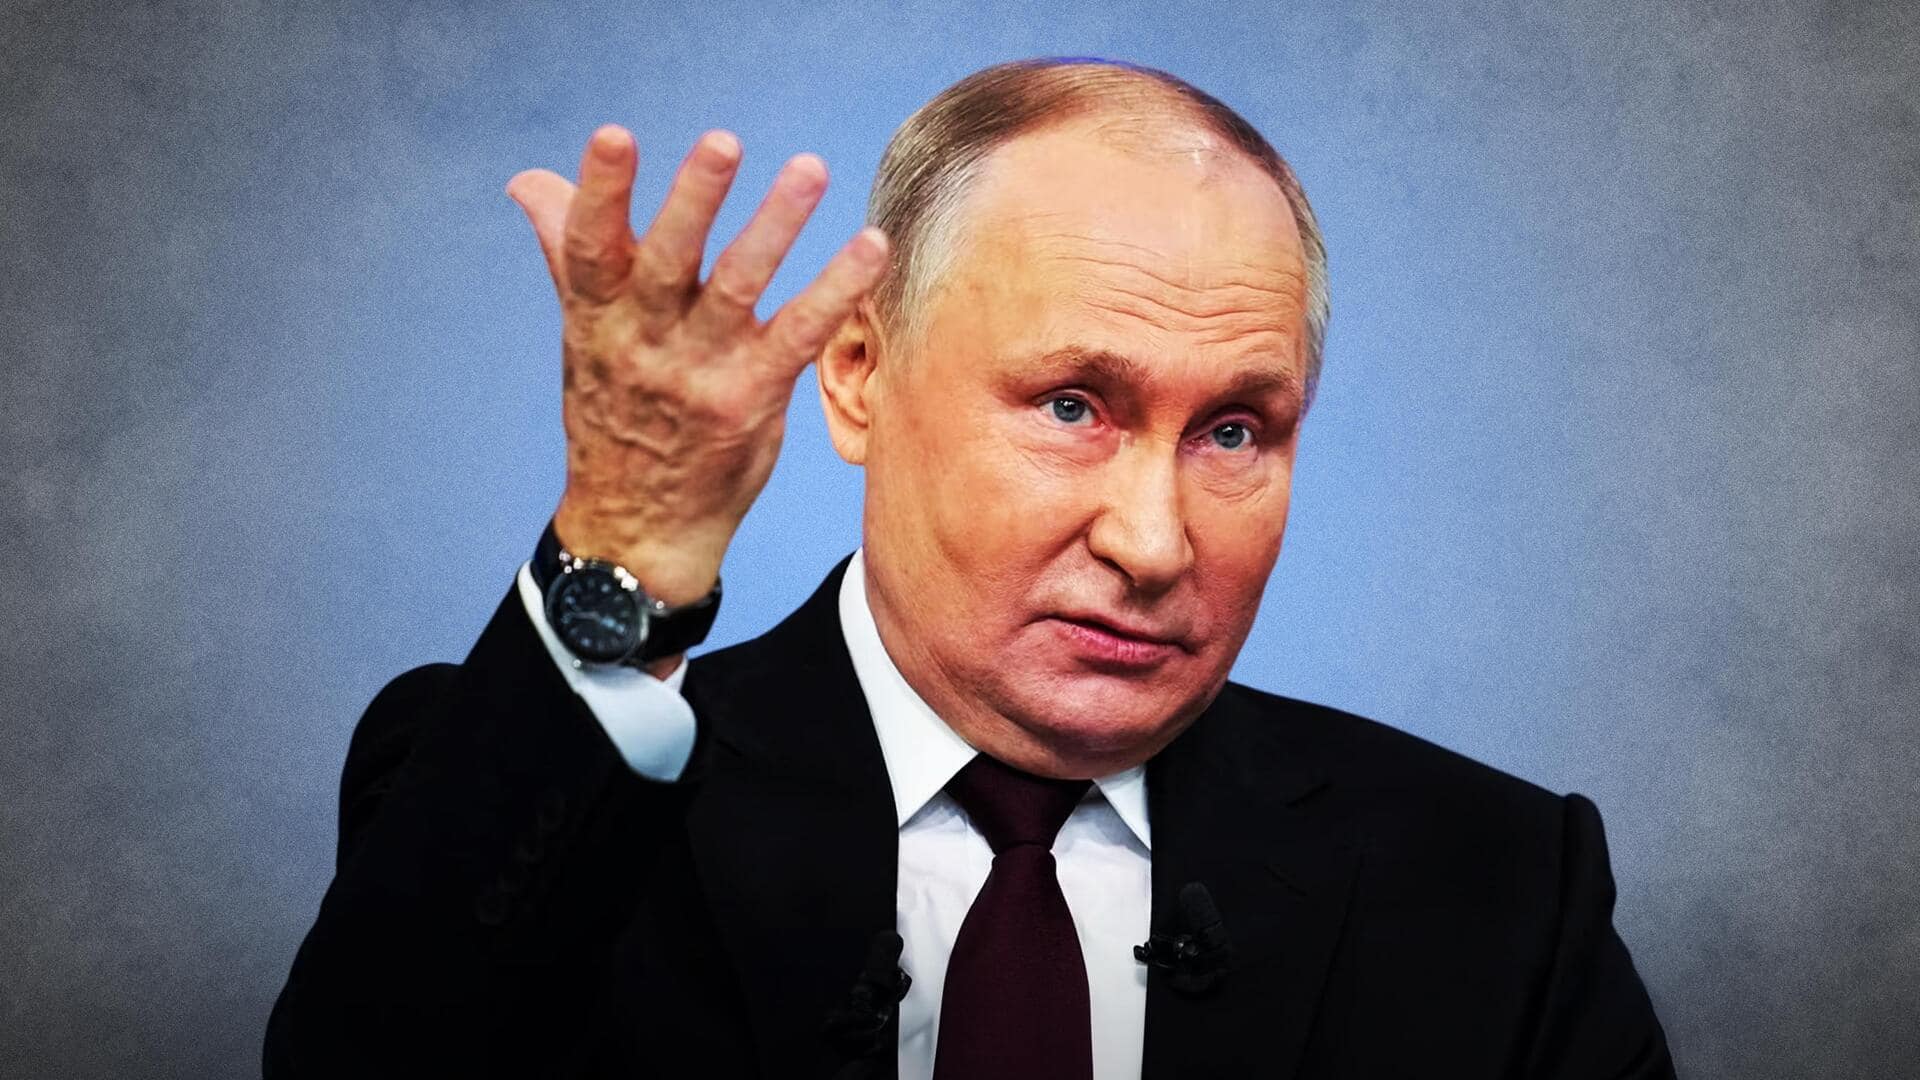 Putin pledges immediate ceasefire in Ukraine but conditions apply 